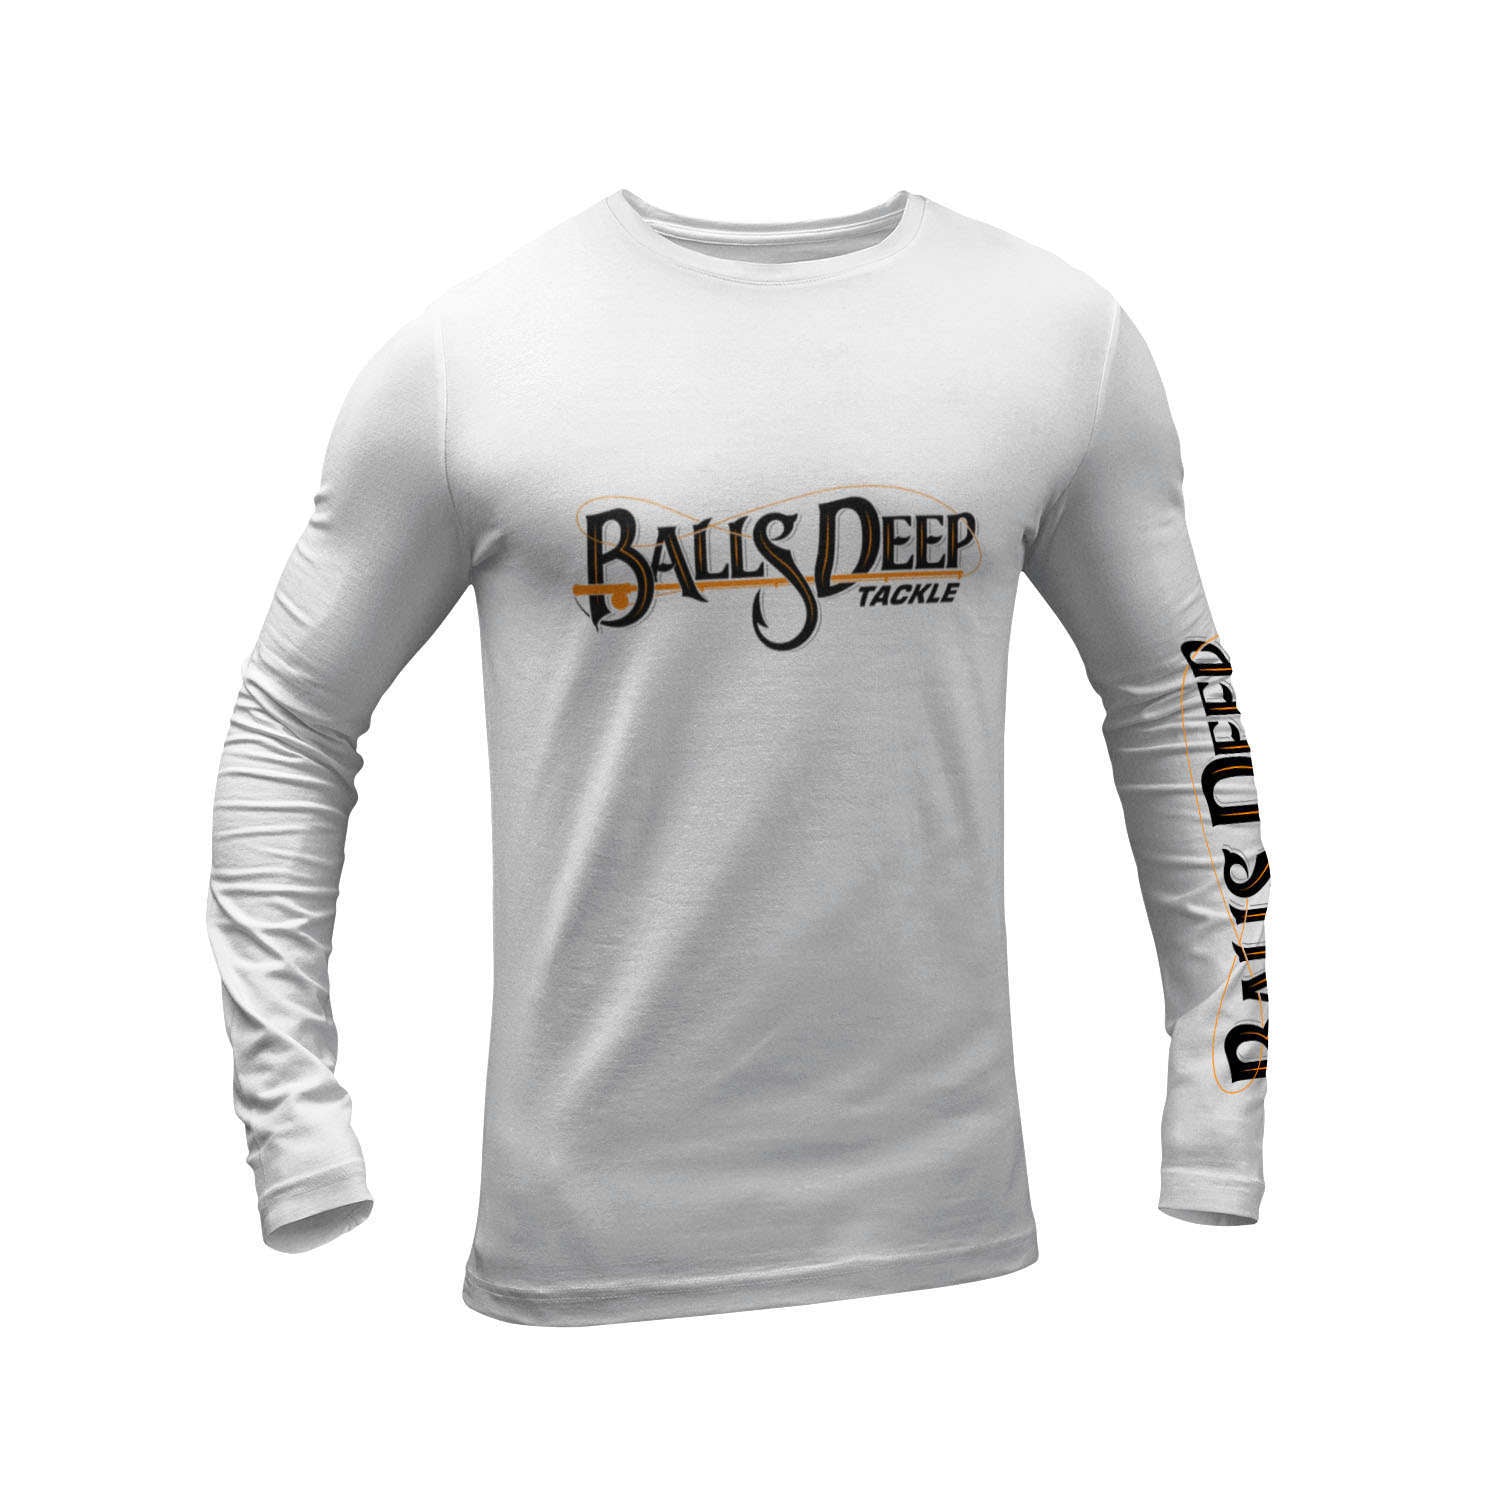 UPF-50 Fishing Shirt - Long Sleeve - 100% Polyester